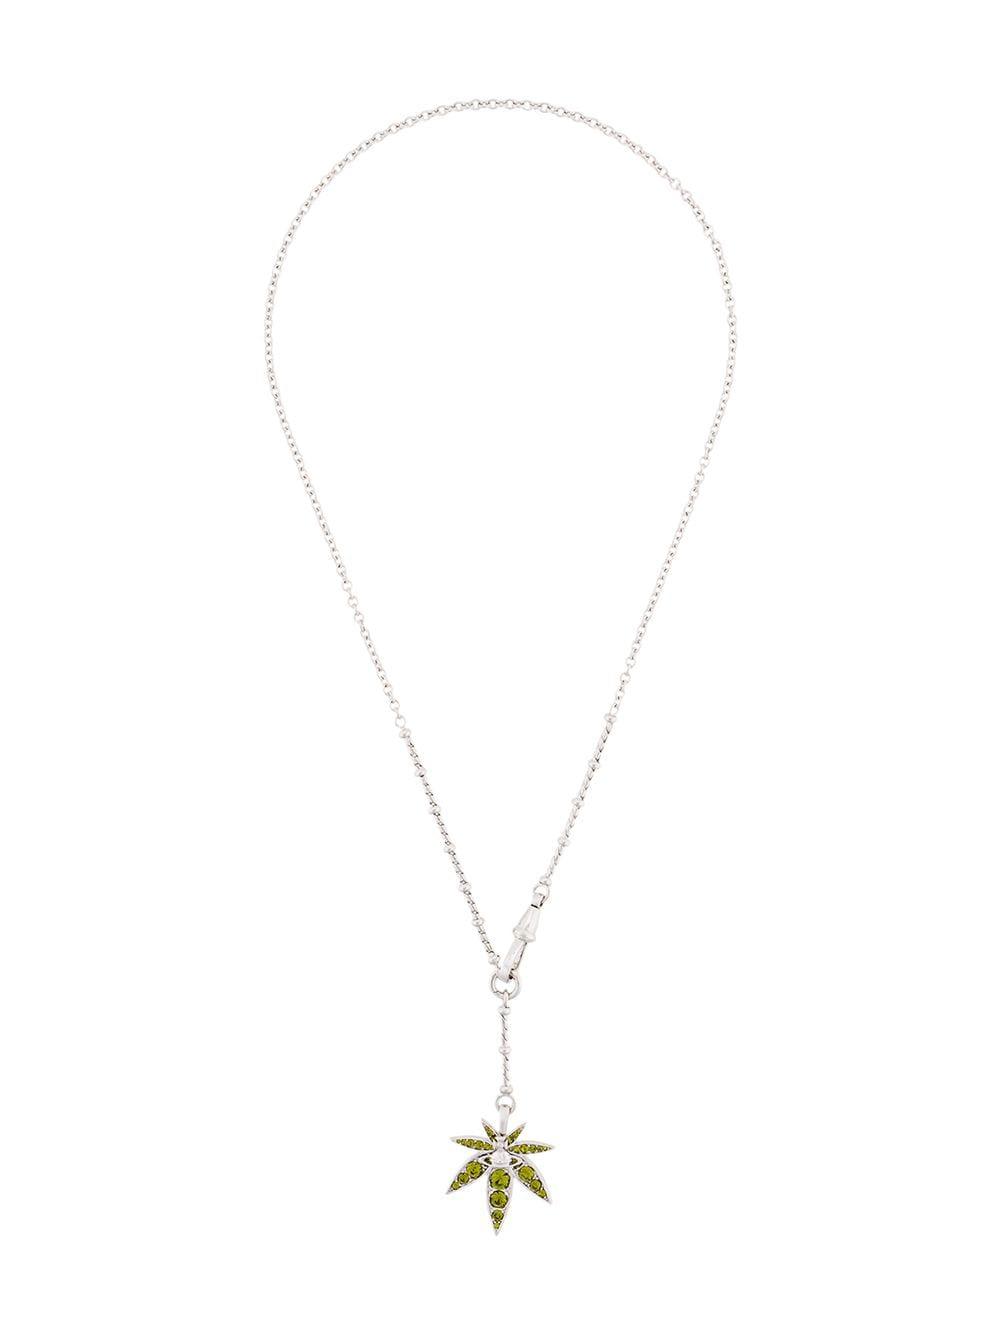 Vivienne Westwood Cannabis Orb Necklace in Metallic